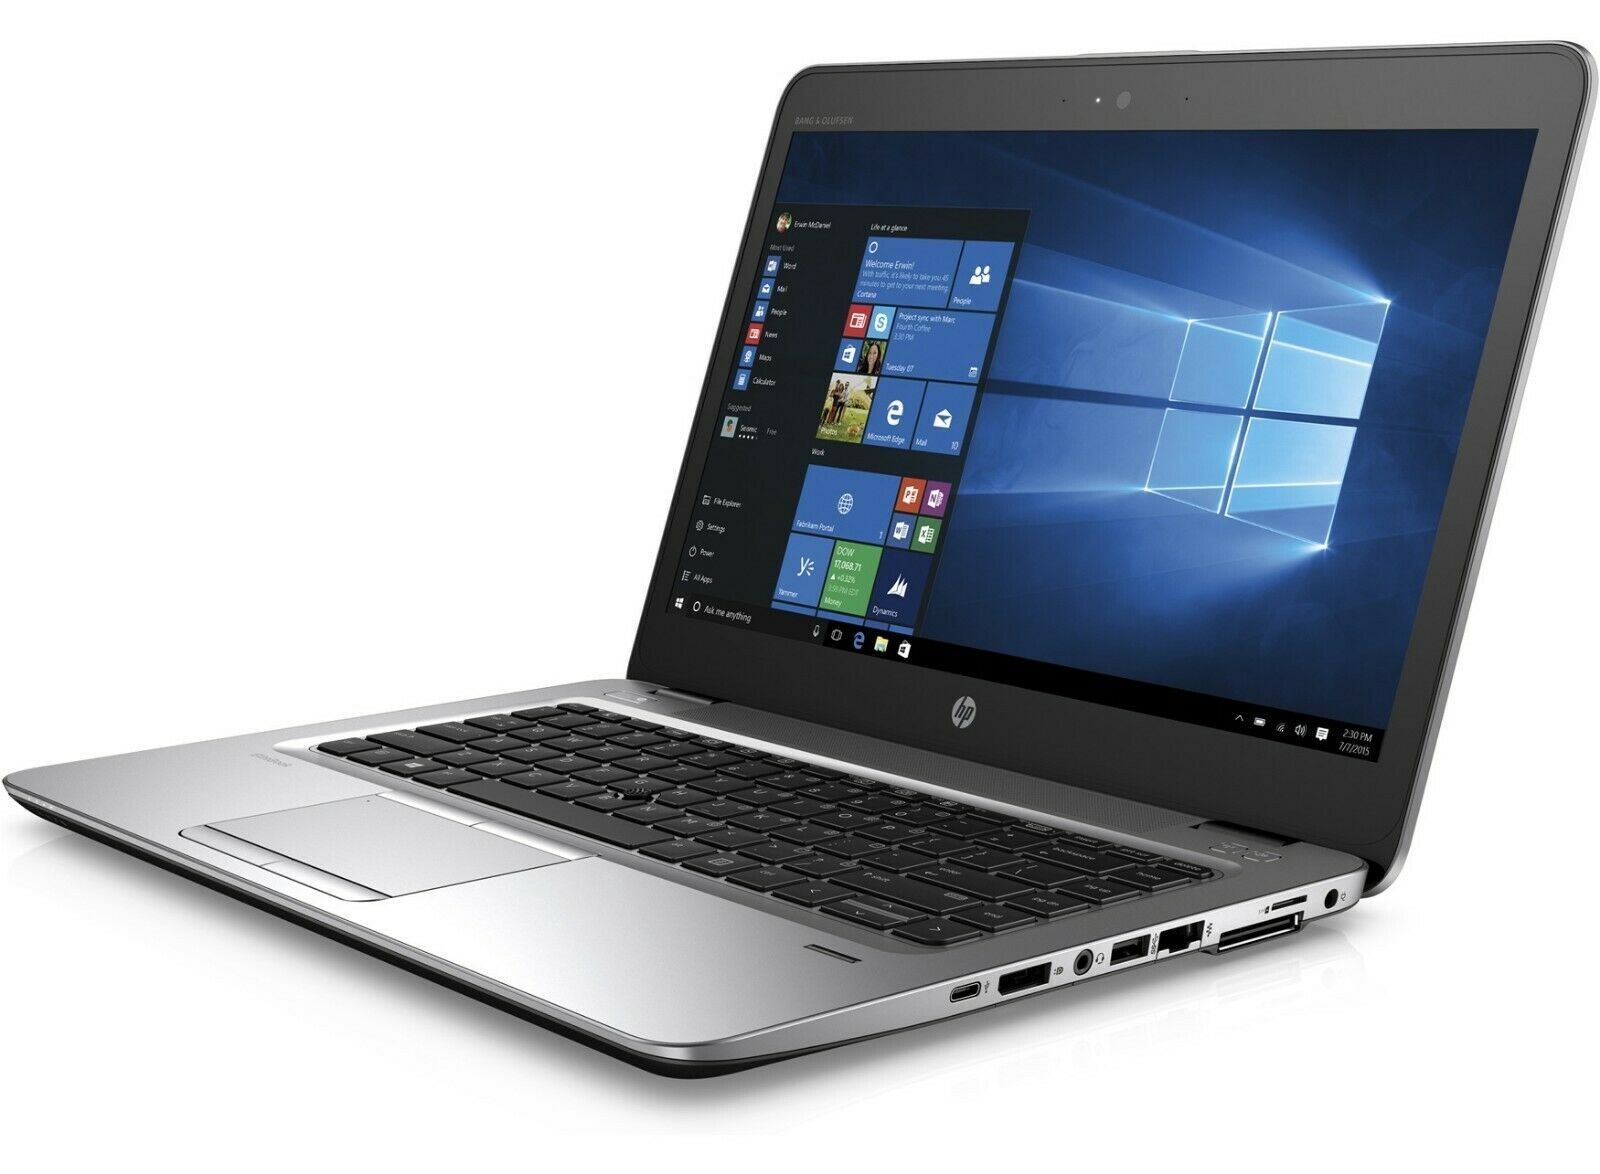 HP EliteBook 820 G3 Intel i7 6600U 2.60GHz 8GB RAM 500GB SSD 12.5" Win 10 Image 1